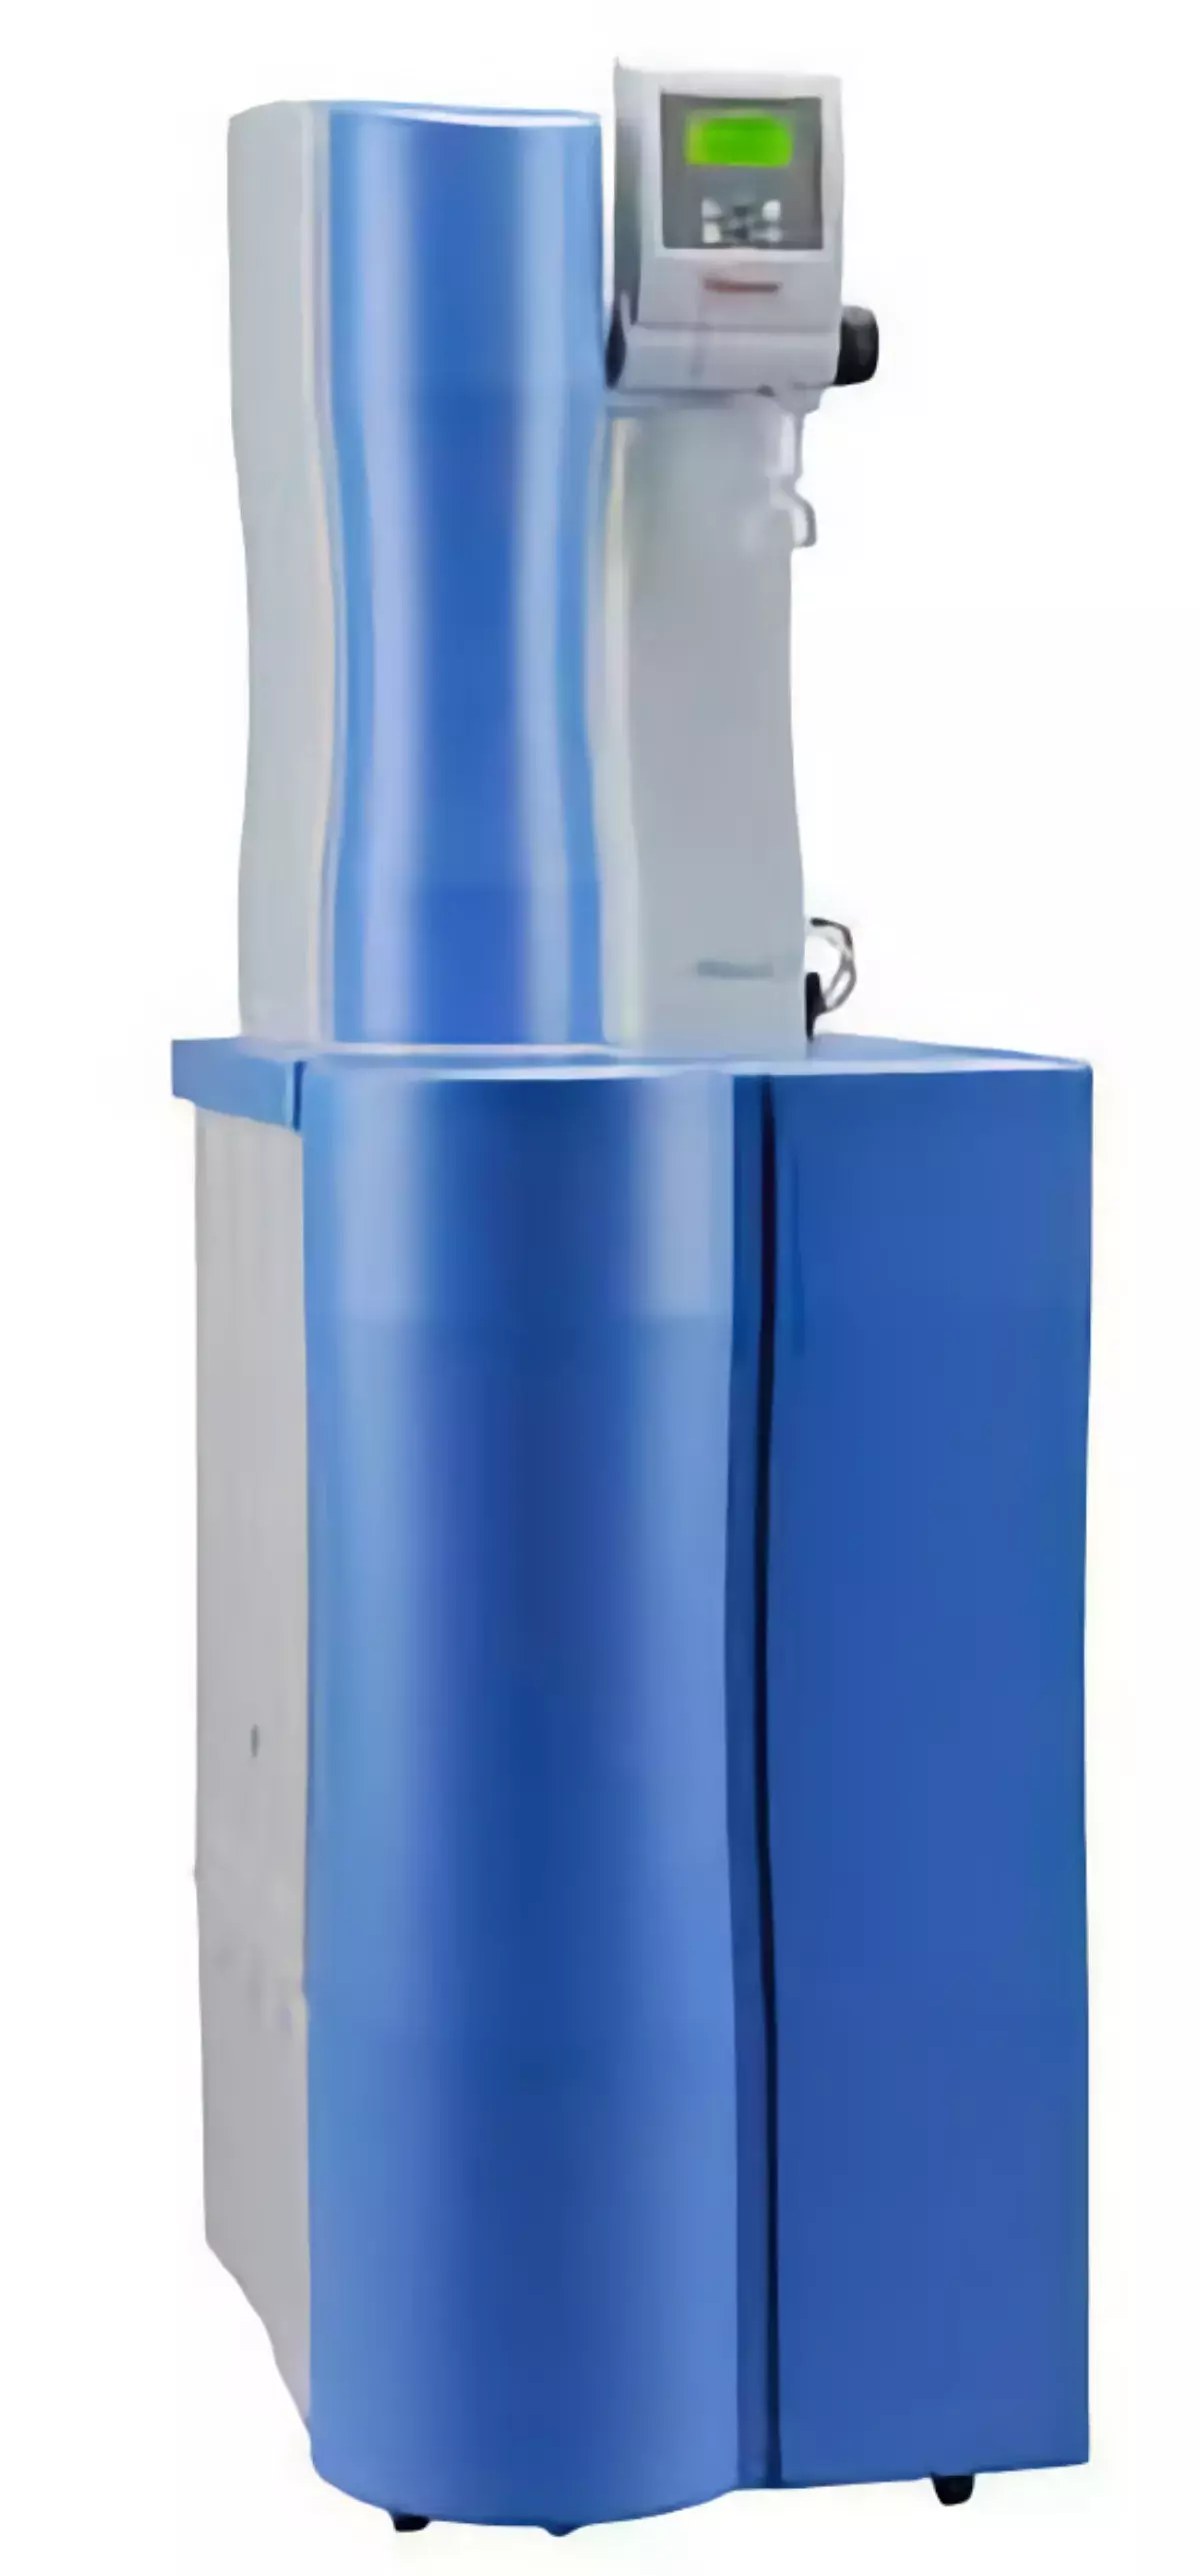 Система очистки воды Barnstead LabTower EDI (тип I и тип II)